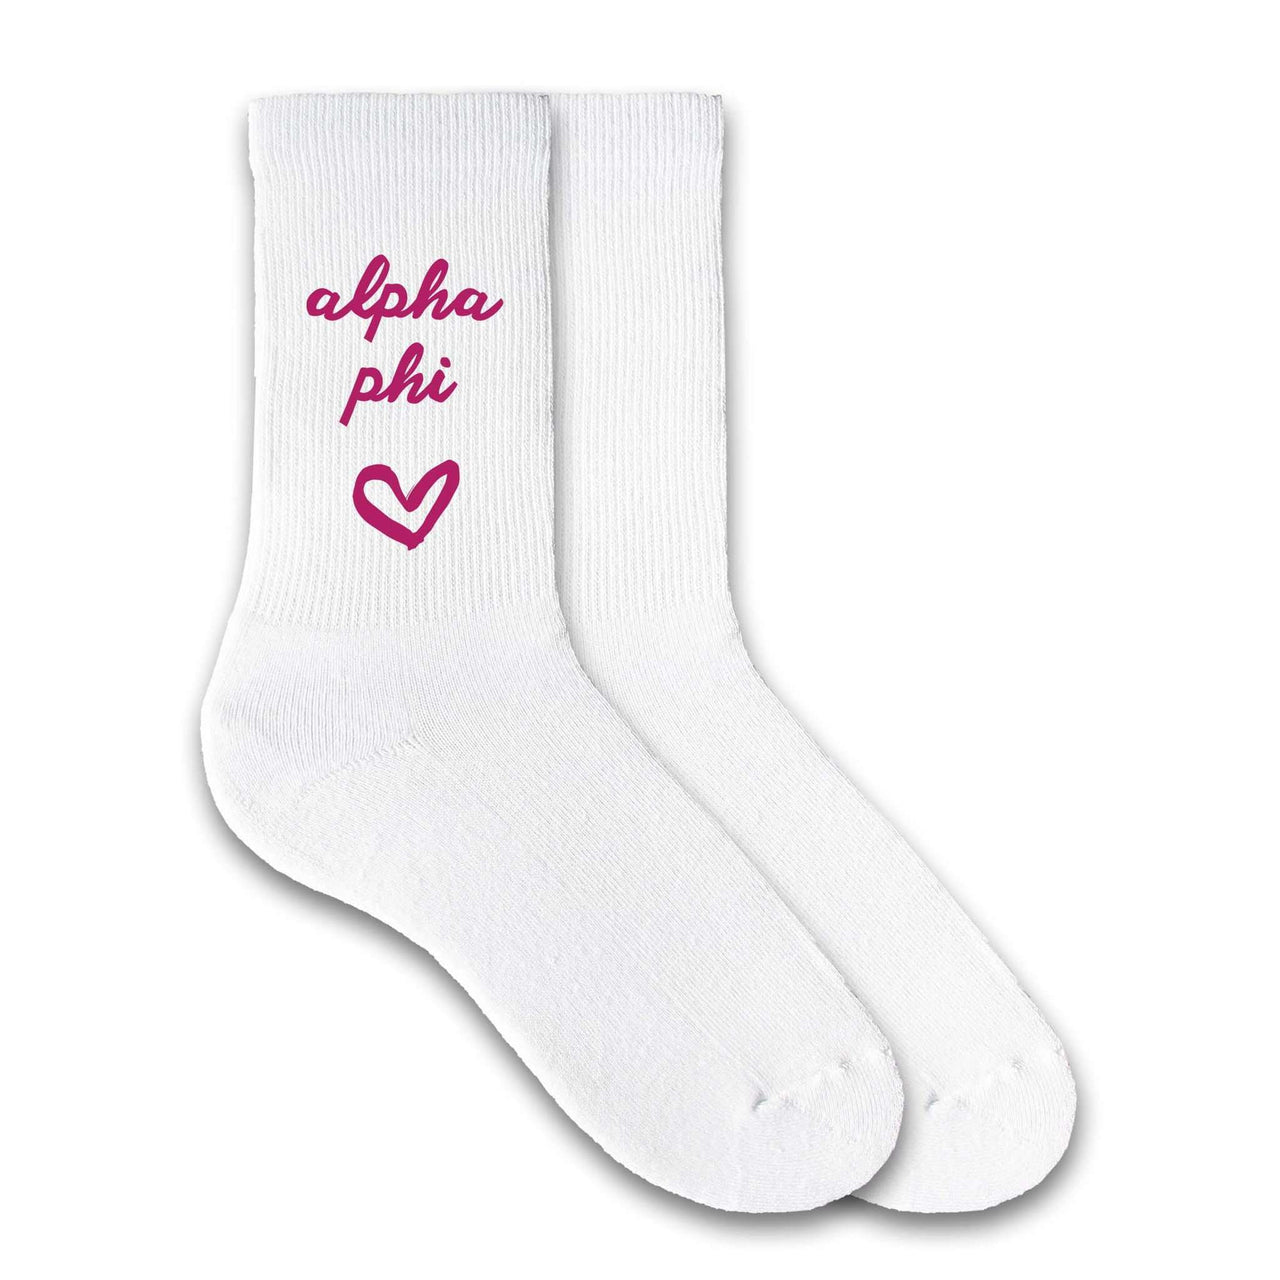 Alpha Phi sorority name and heart design custom printed on comfy white cotton crew socks.